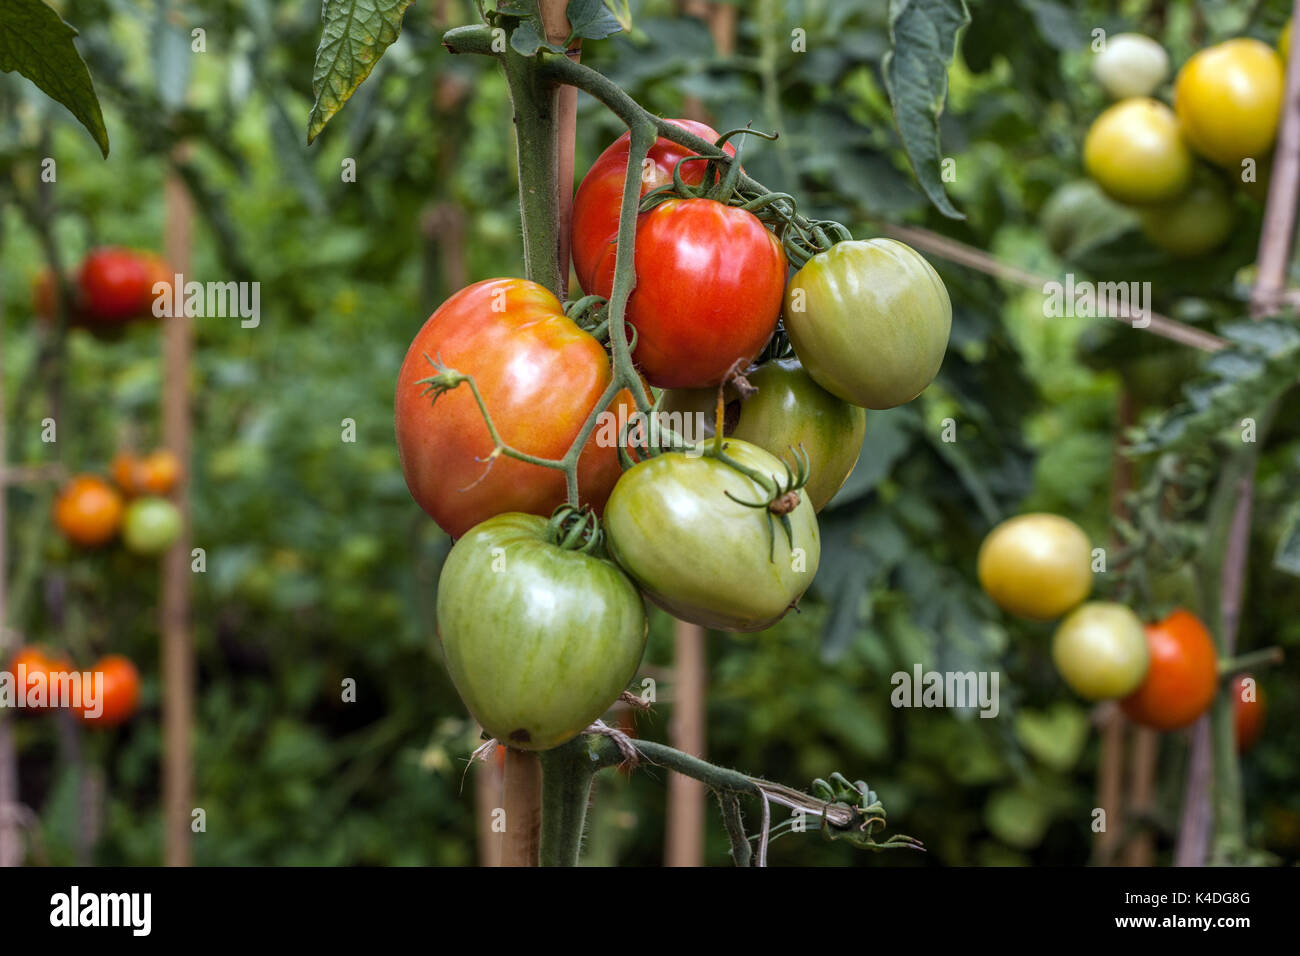 Tomato ripening tomatoes on the vine overhead in the garden tomato ripe unripe Stock Photo